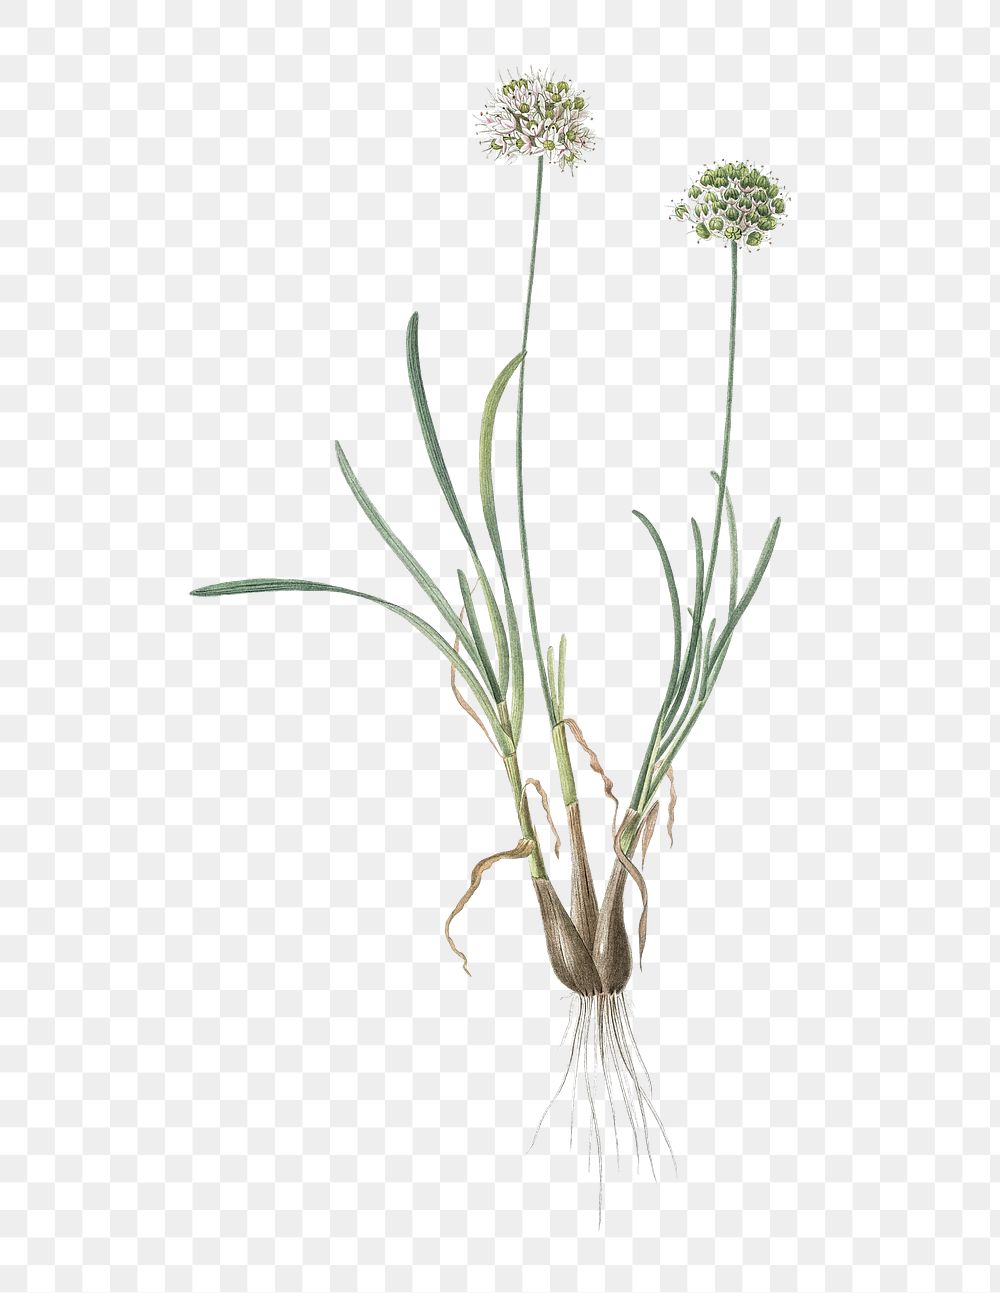 Allium carolinianum png sticker, vintage botanical illustration, transparent background